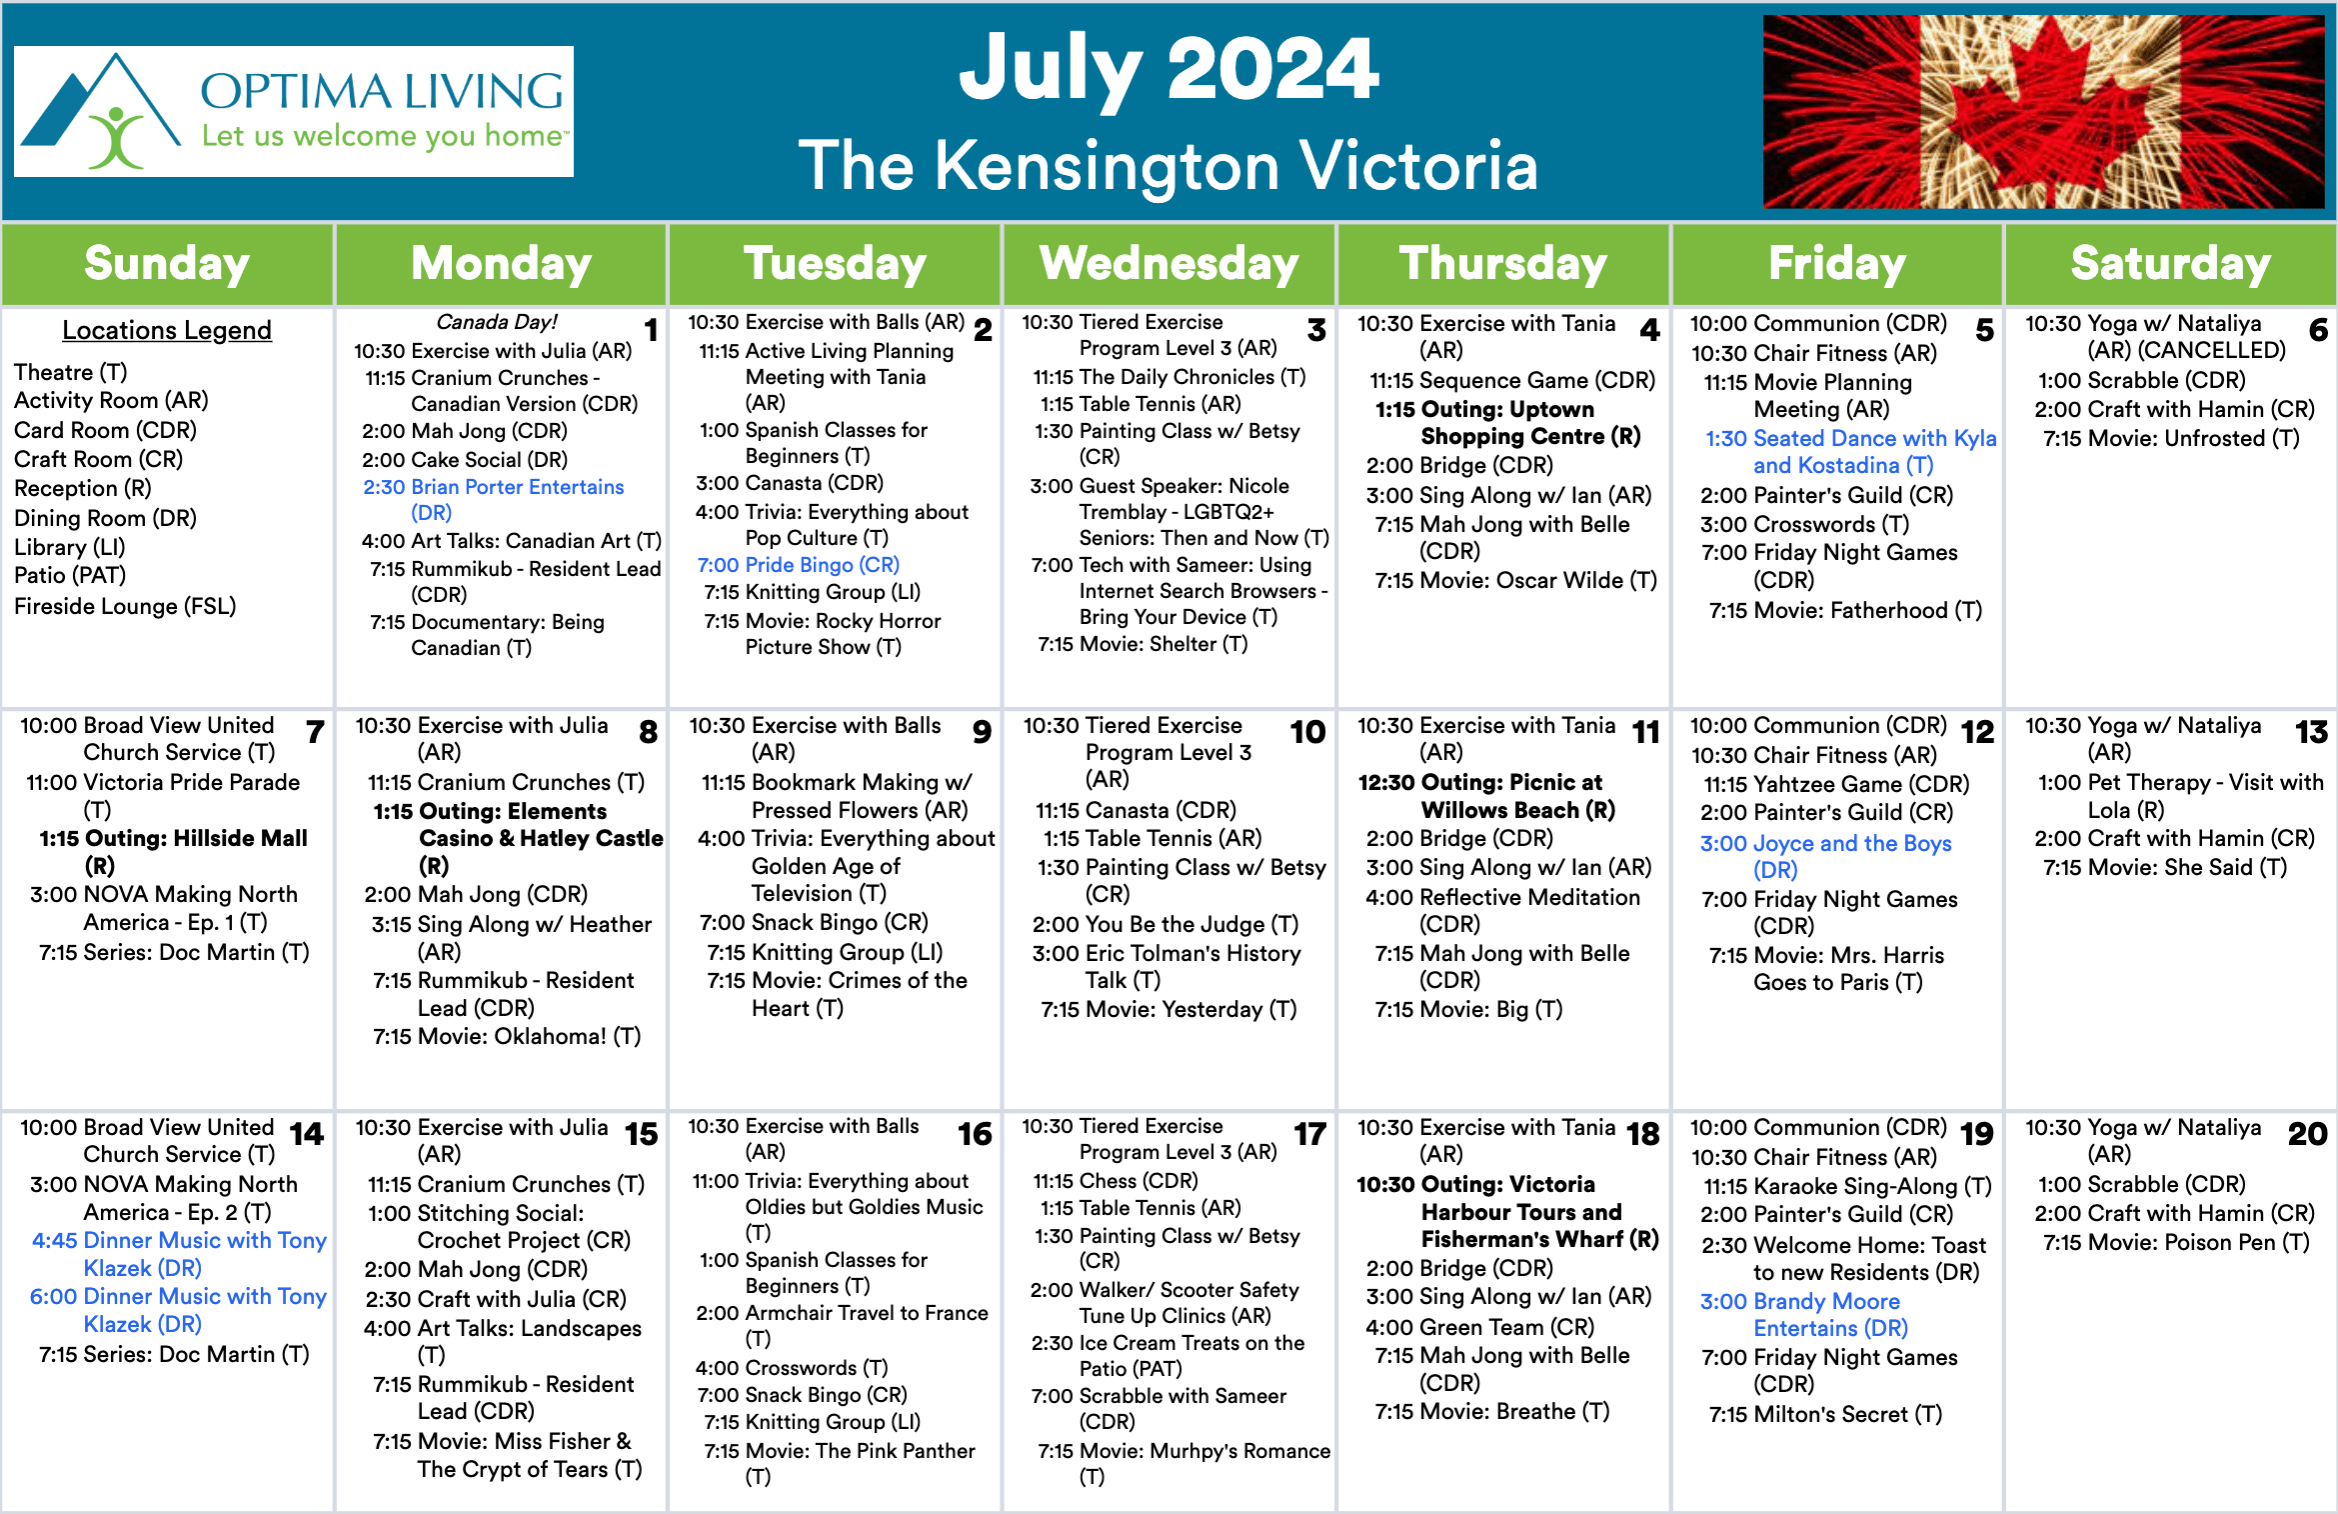 Kensington July 1 - 20 2024 event calendar